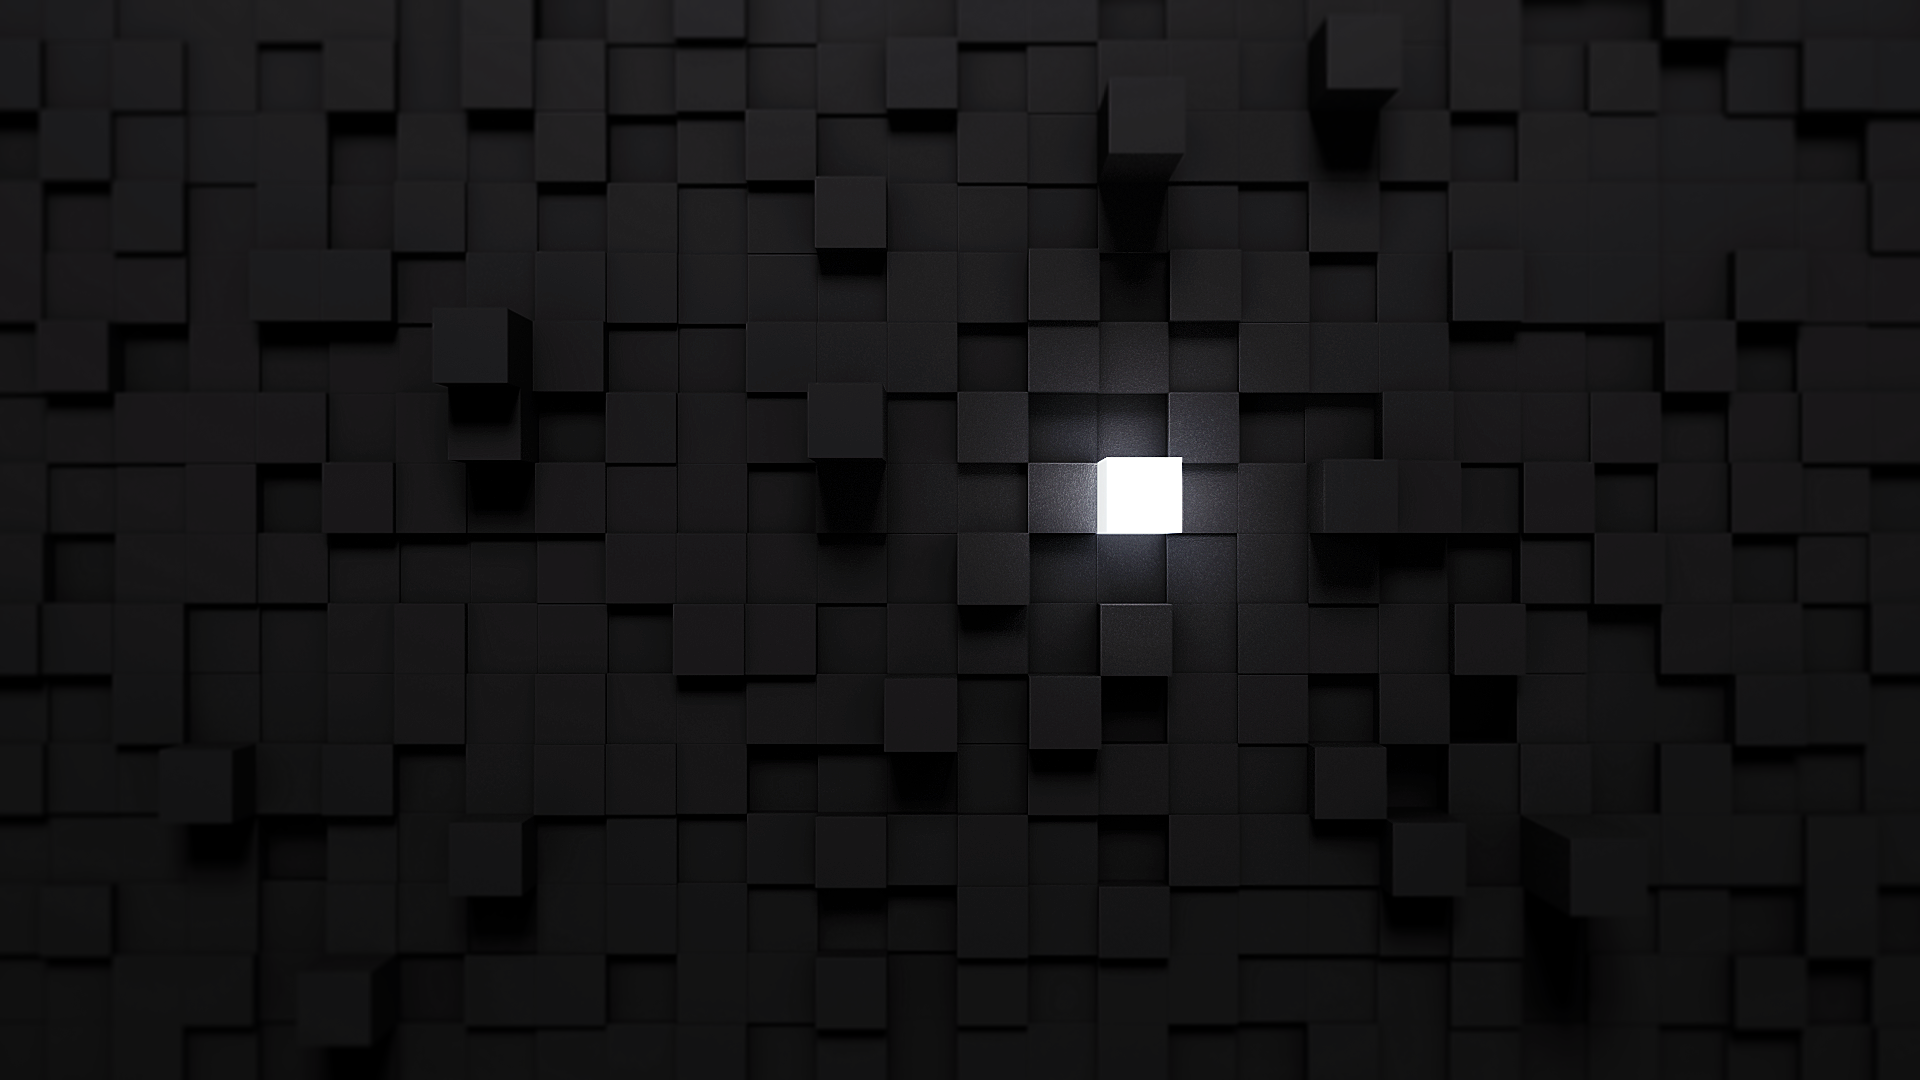 General 1920x1080 cube lights Blender minimalism black white 3D blocks dark digital art CGI abstract 3D Abstract monochrome